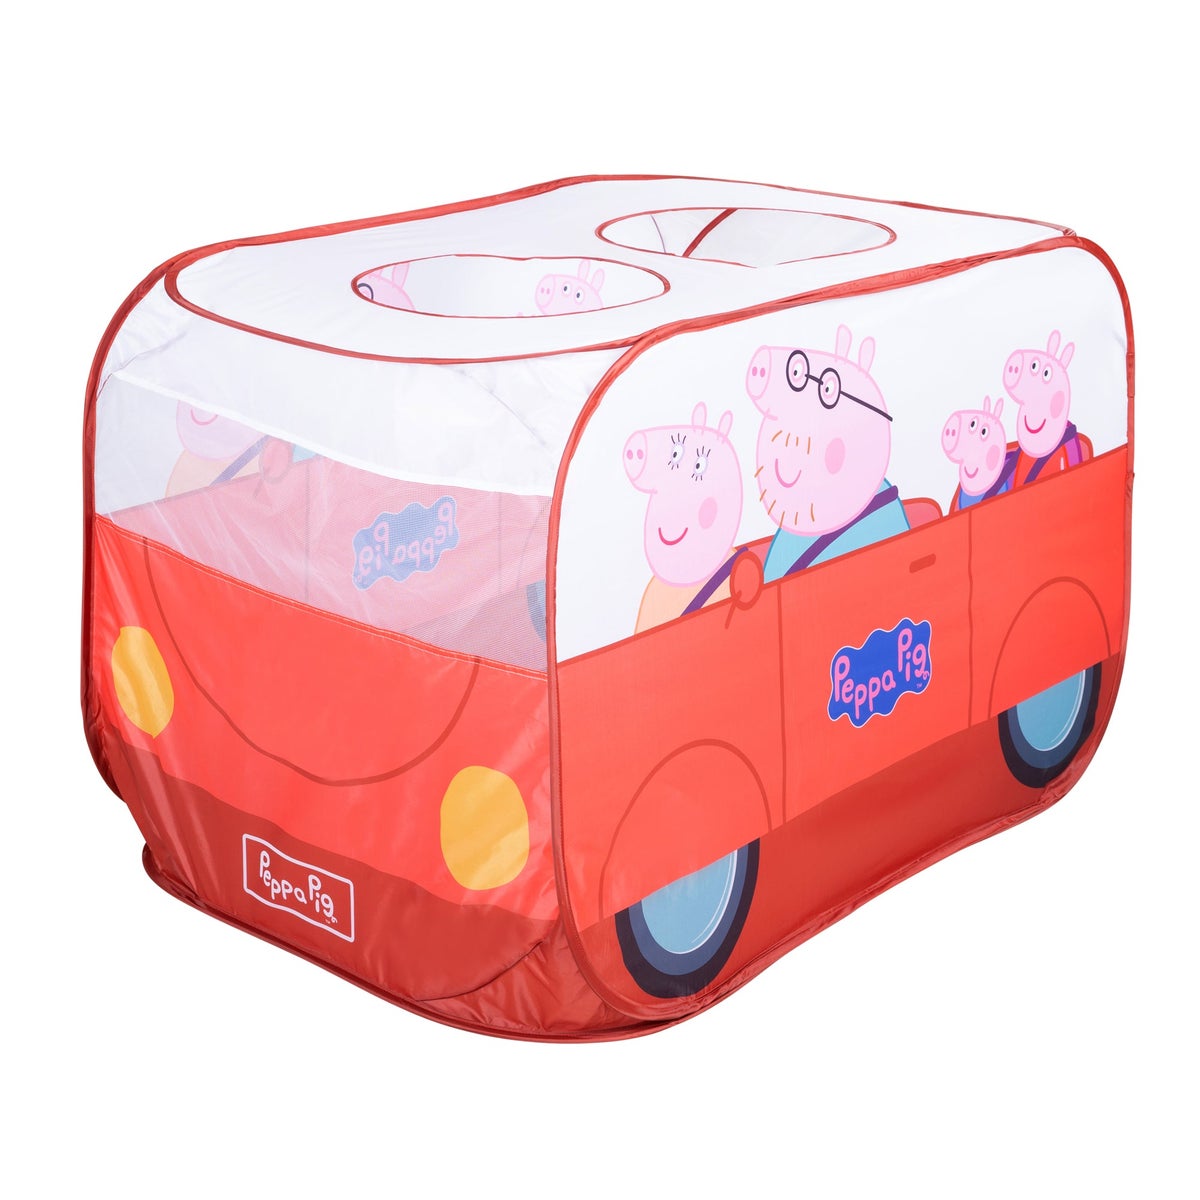 ROBA Pop Up Spielbus 'Peppa Pig' - Kinderzelt in Autoform - Für Indoor & Outdoor